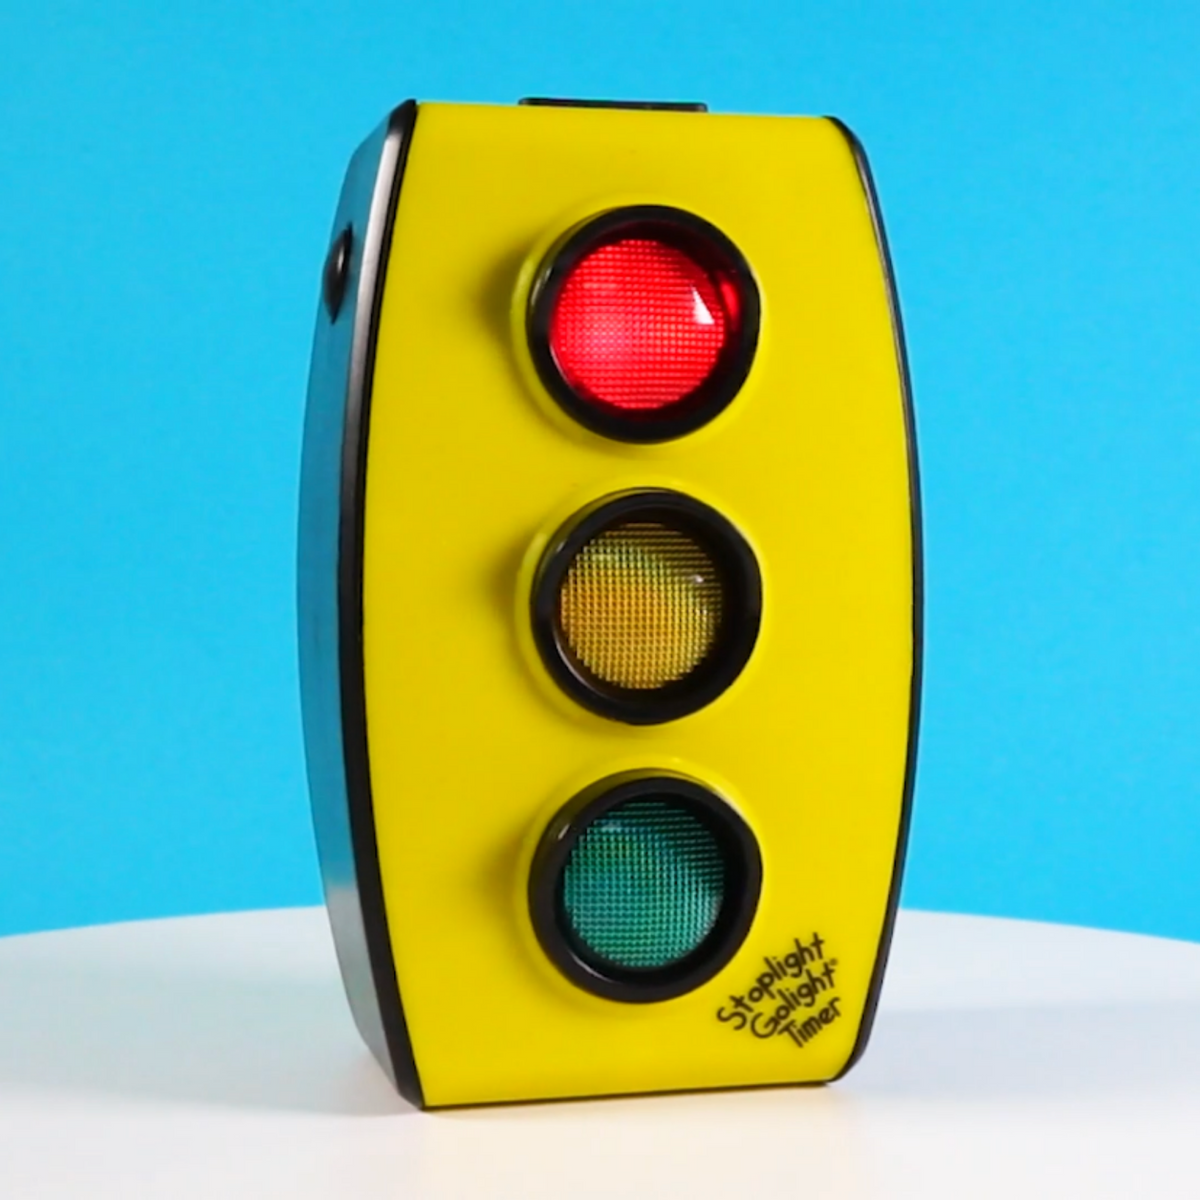 Stoplight Golight Kids Timer BeeZee – Stoplight Golight Timer